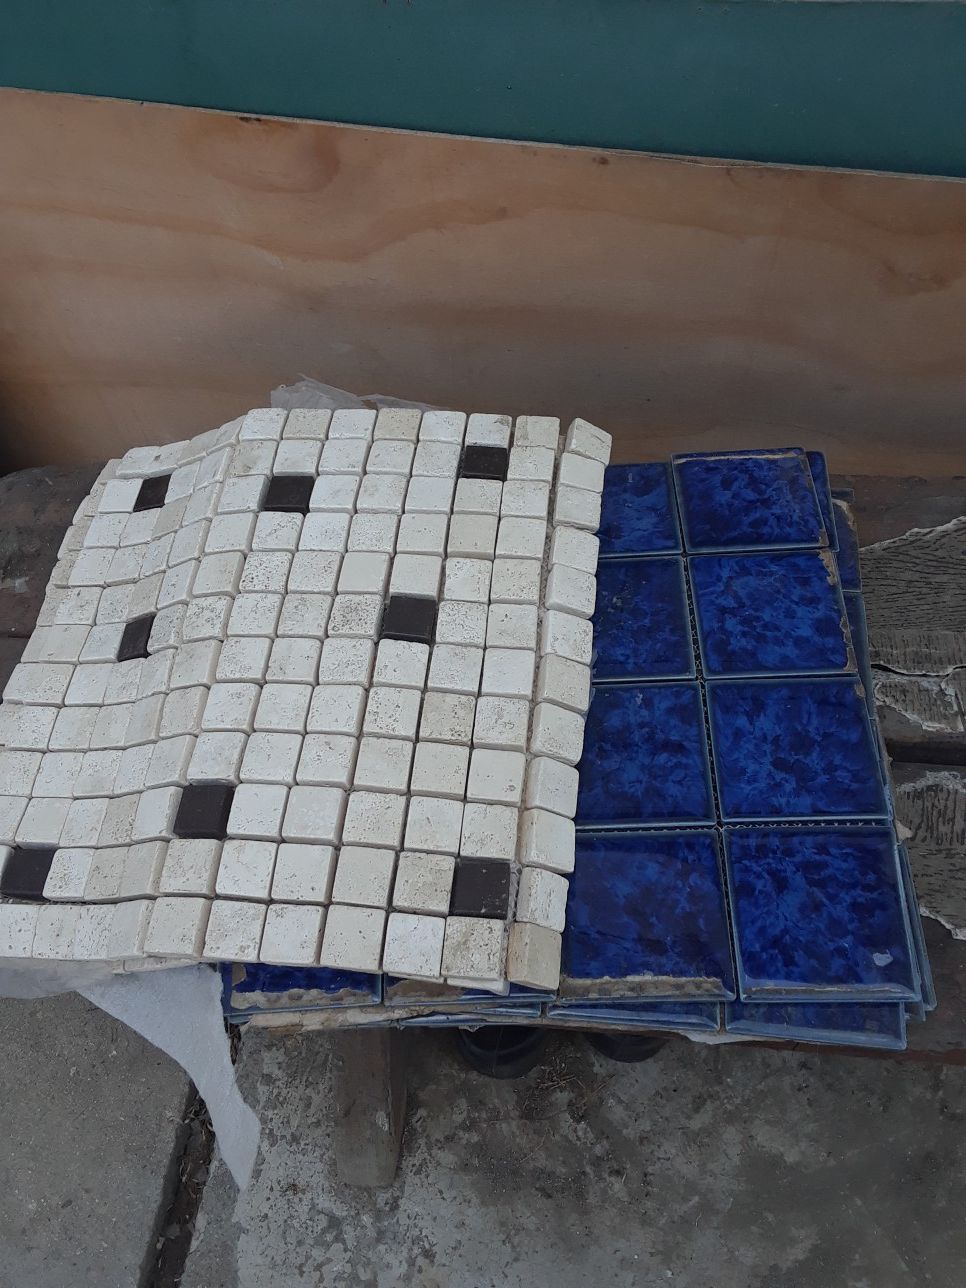 12x12 tiles